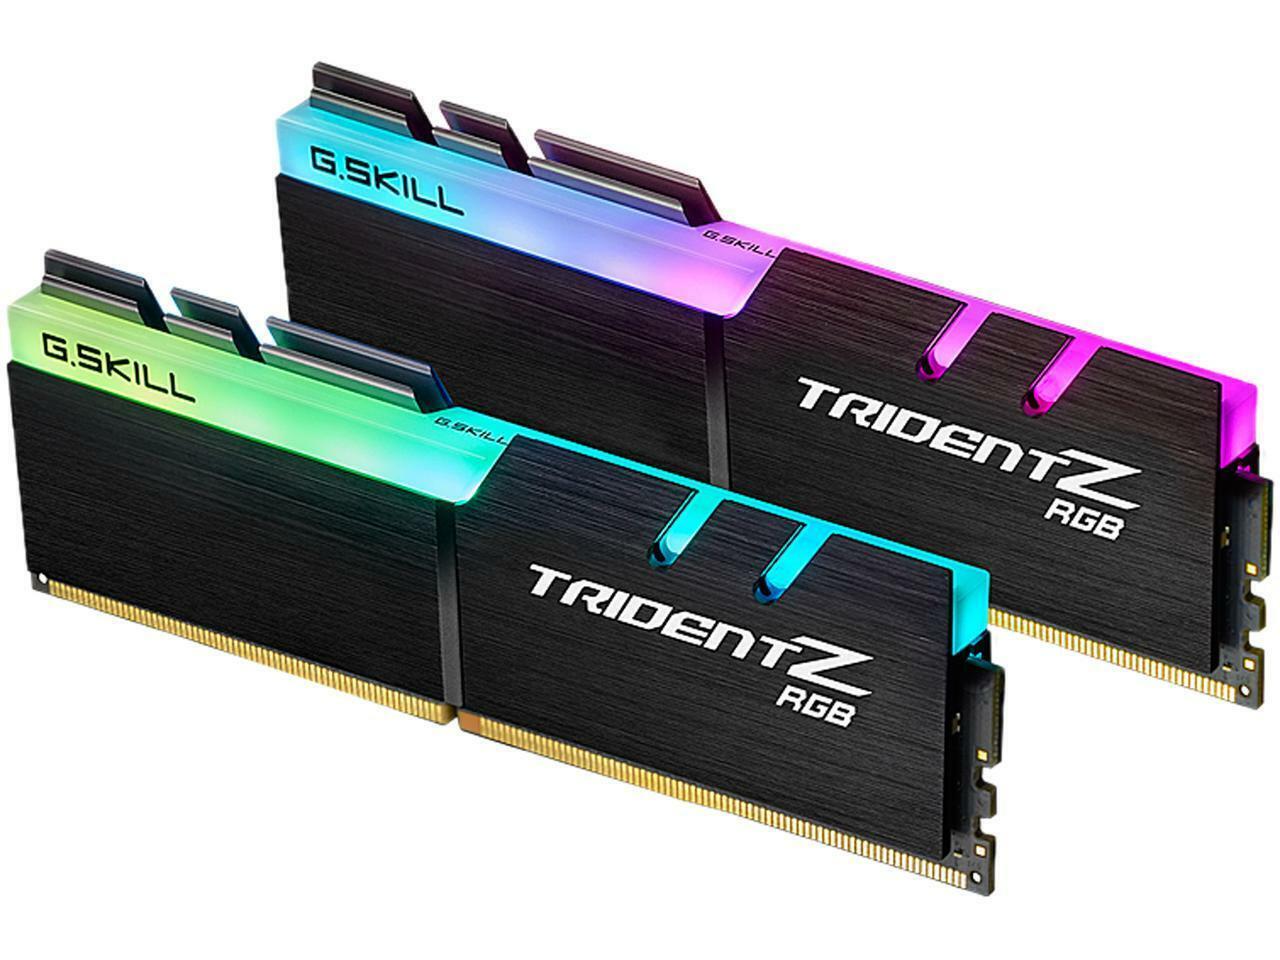 G.SKILL TridentZ RGB Series 16GB 288-Pin DDR4 SDRAM DDR4 3000 Desktop Memory